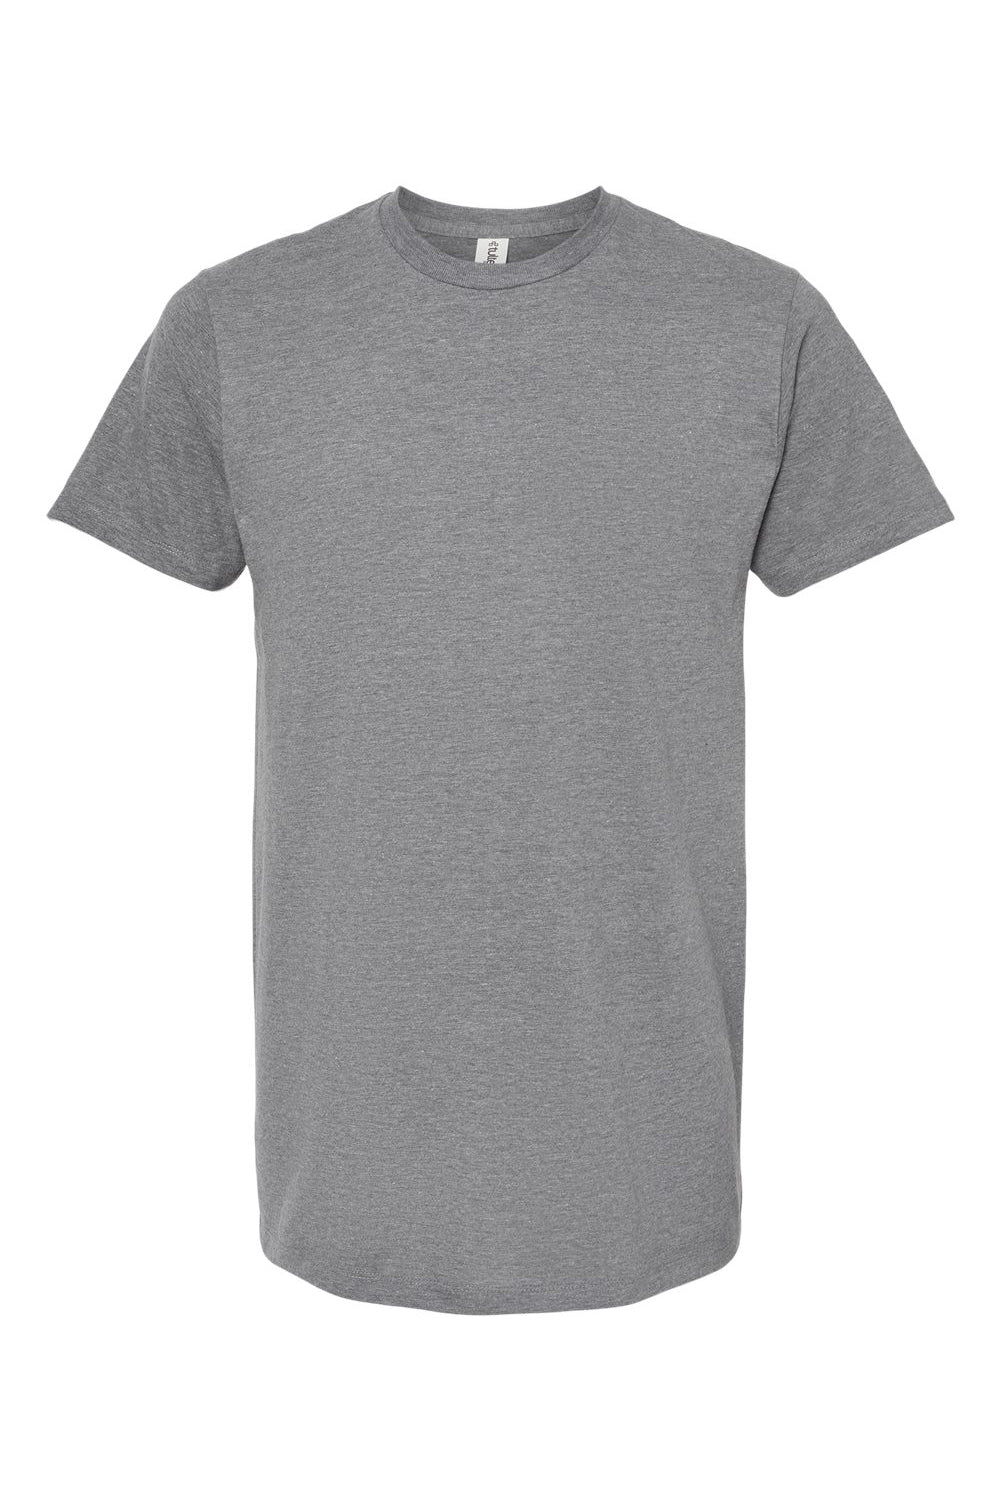 Tultex 541 Mens Premium Short Sleeve Crewneck T-Shirt Heather Grey Flat Front